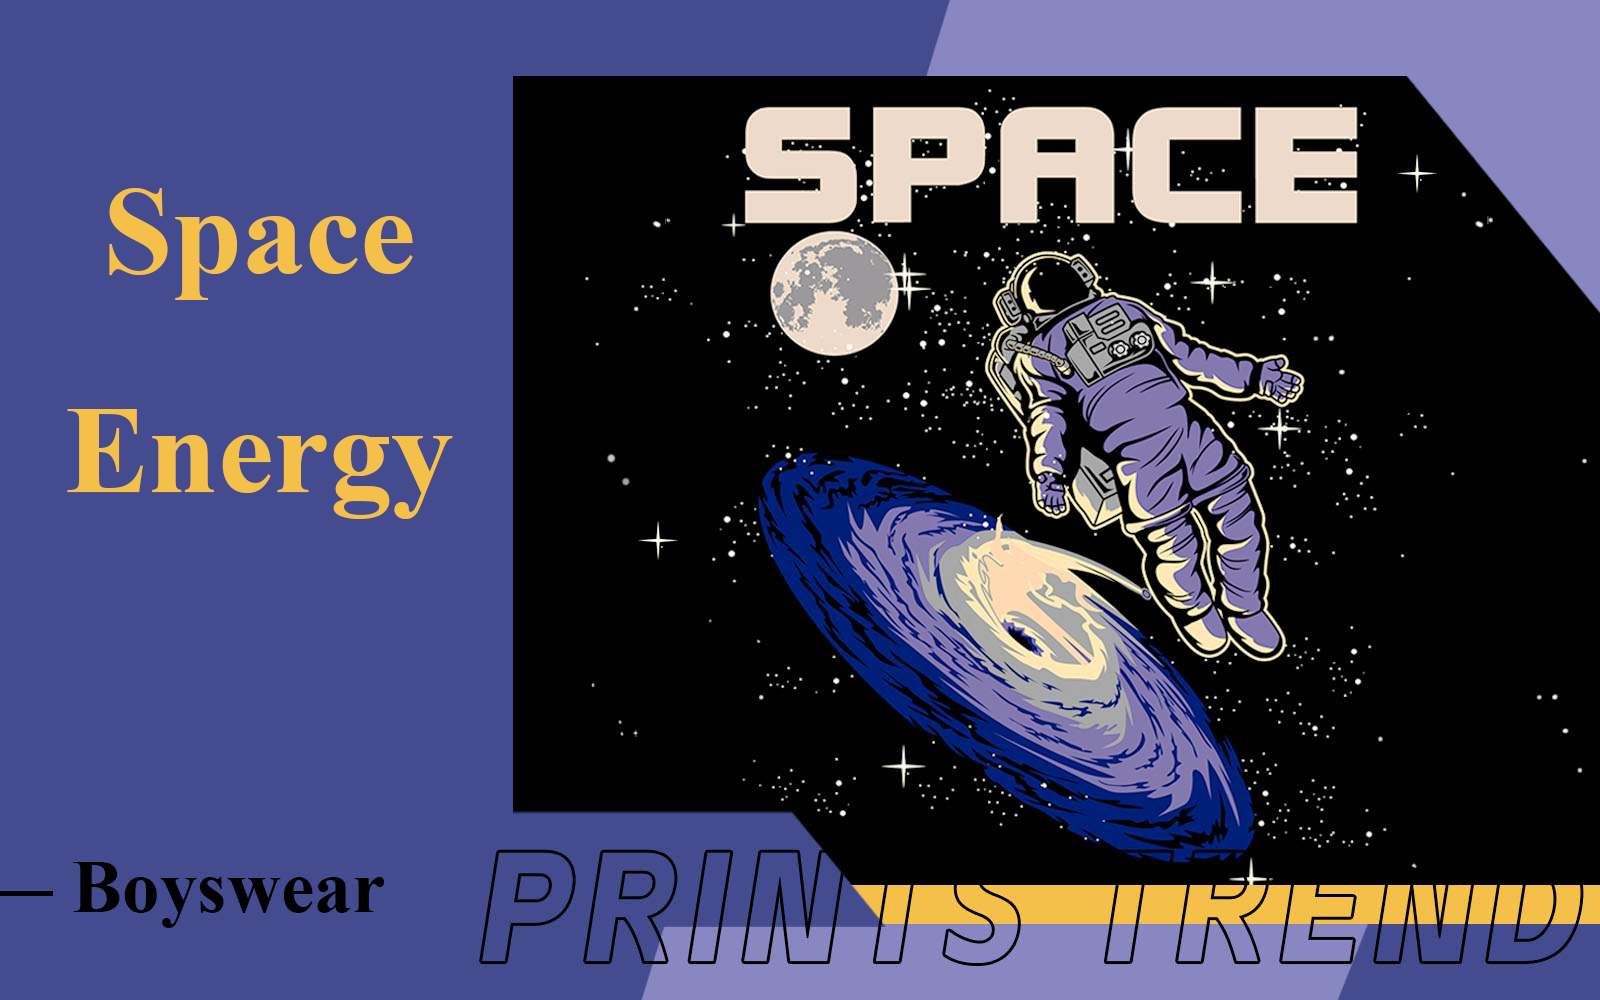 Space Energy -- The Pattern Trend for Boyswear